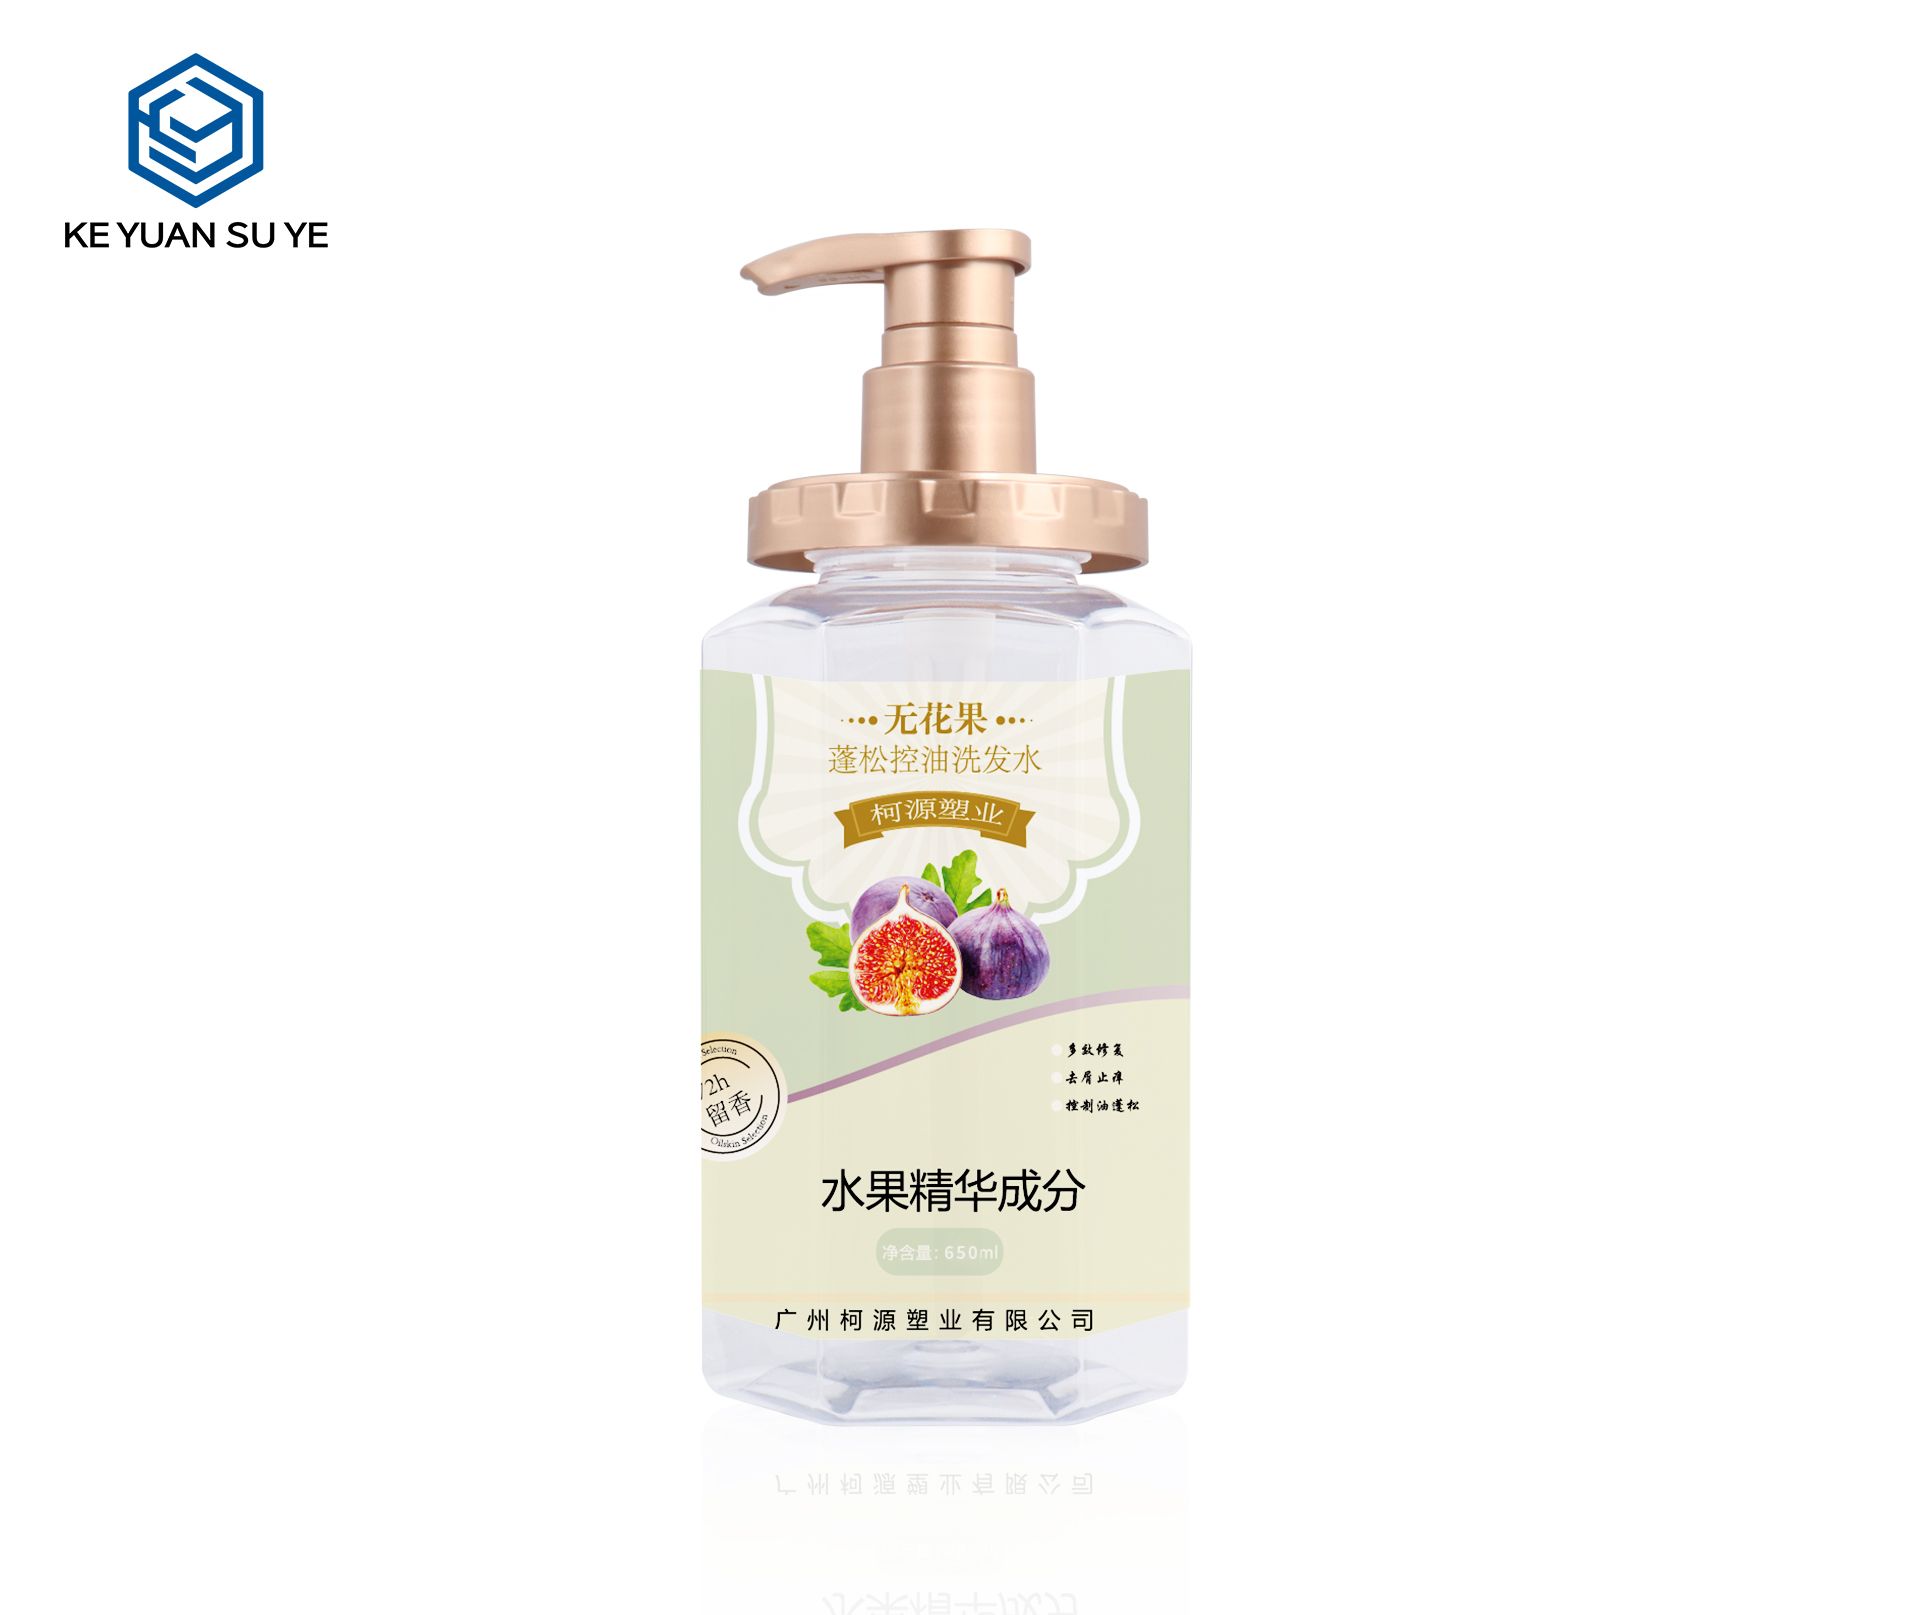 KY240 Empty 650ml Transparent Plastic Shampoo Bottle with Pump